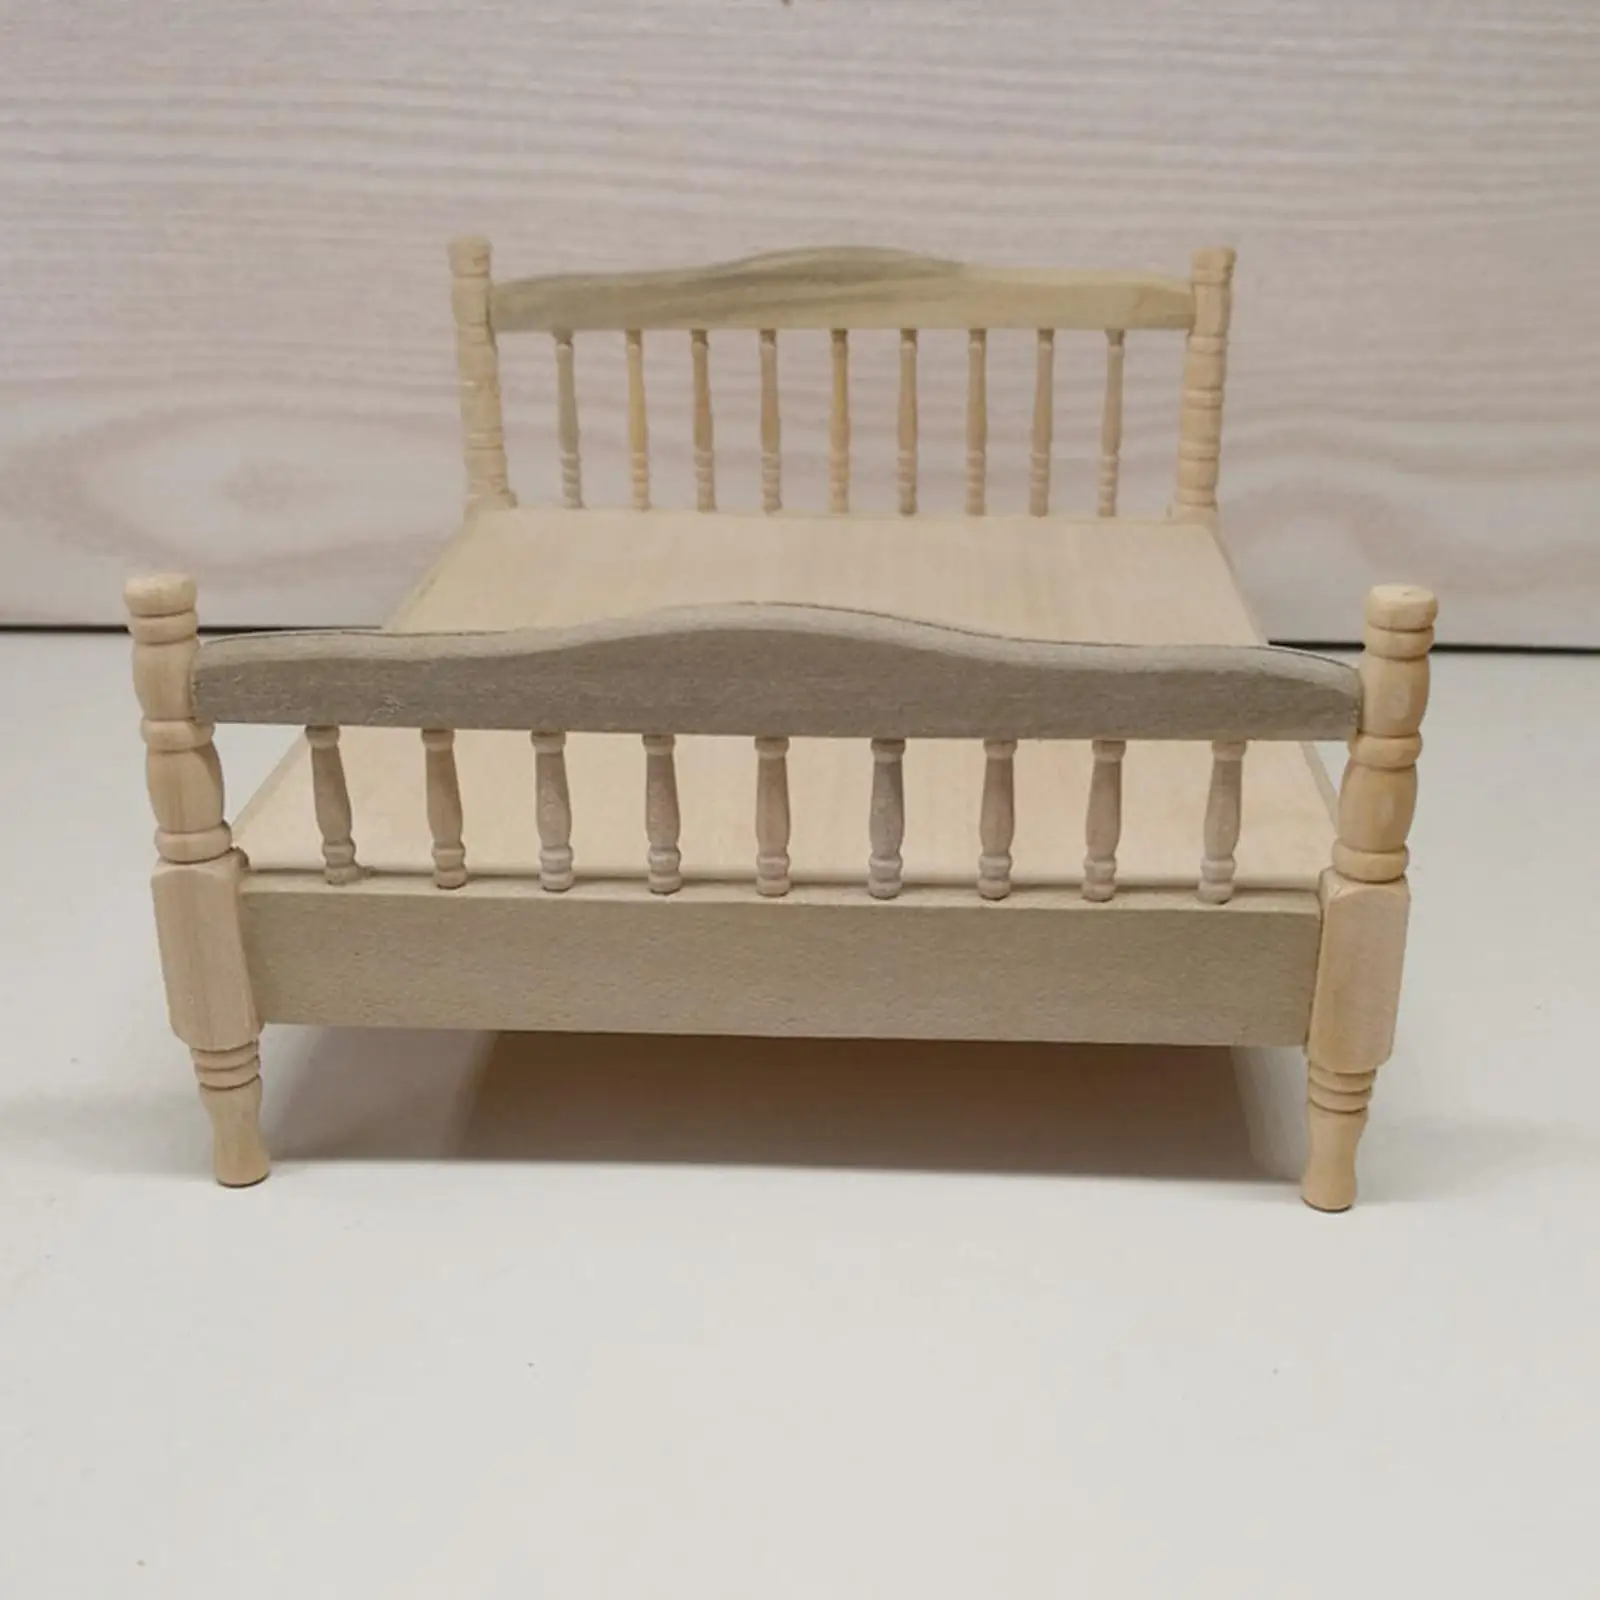 1:12 European Double Bed Model, Miniature Bedroom Furniture Scenes, Wooden Mini Bed, Wooden Bed Model for DIY Scenery